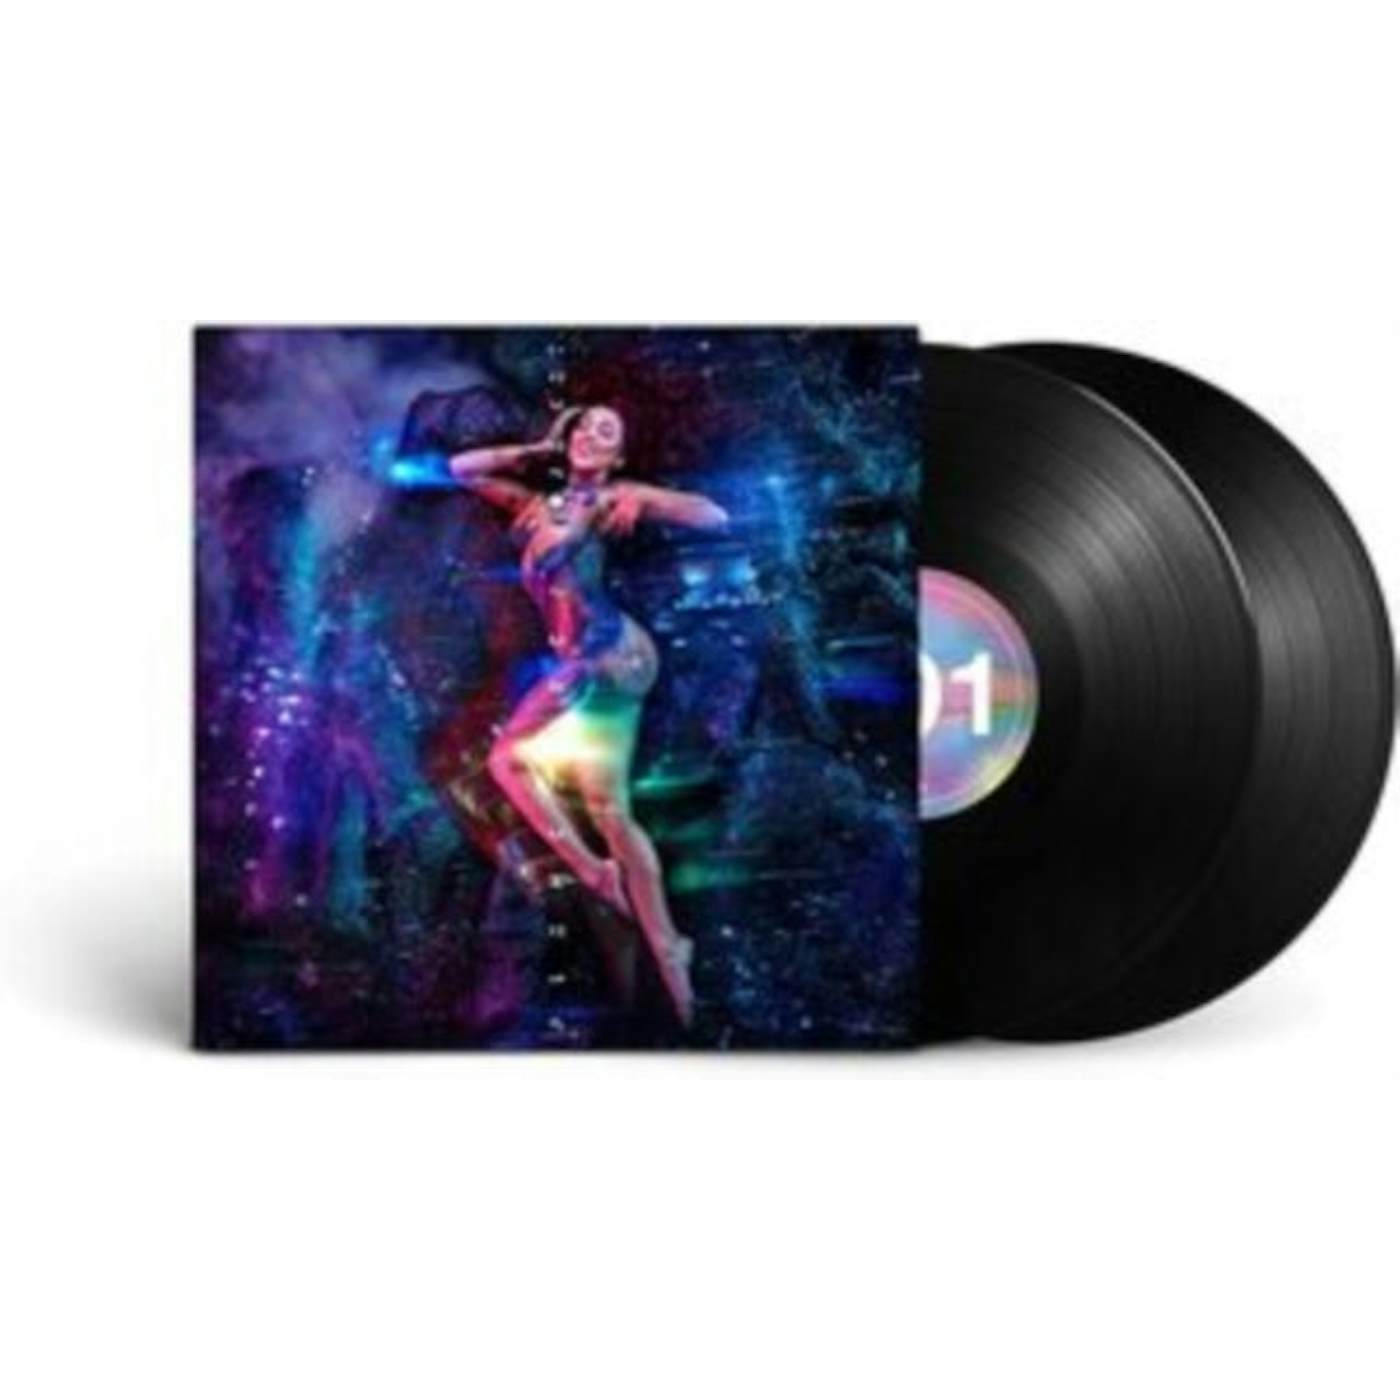 Doja Cat LP Vinyl Record - Planet Her (Deluxe Edition)